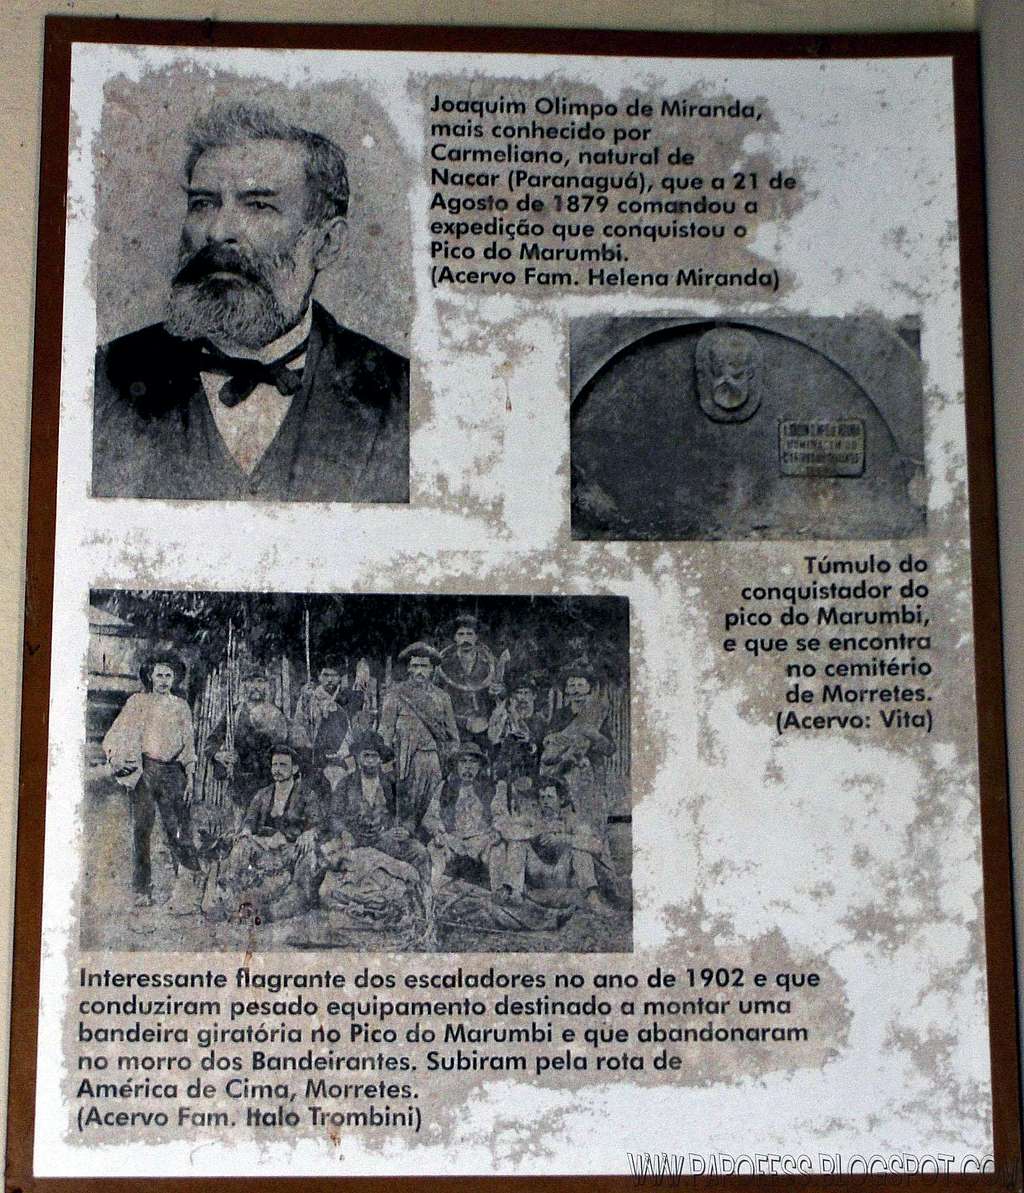 The first brazilian mountaineer